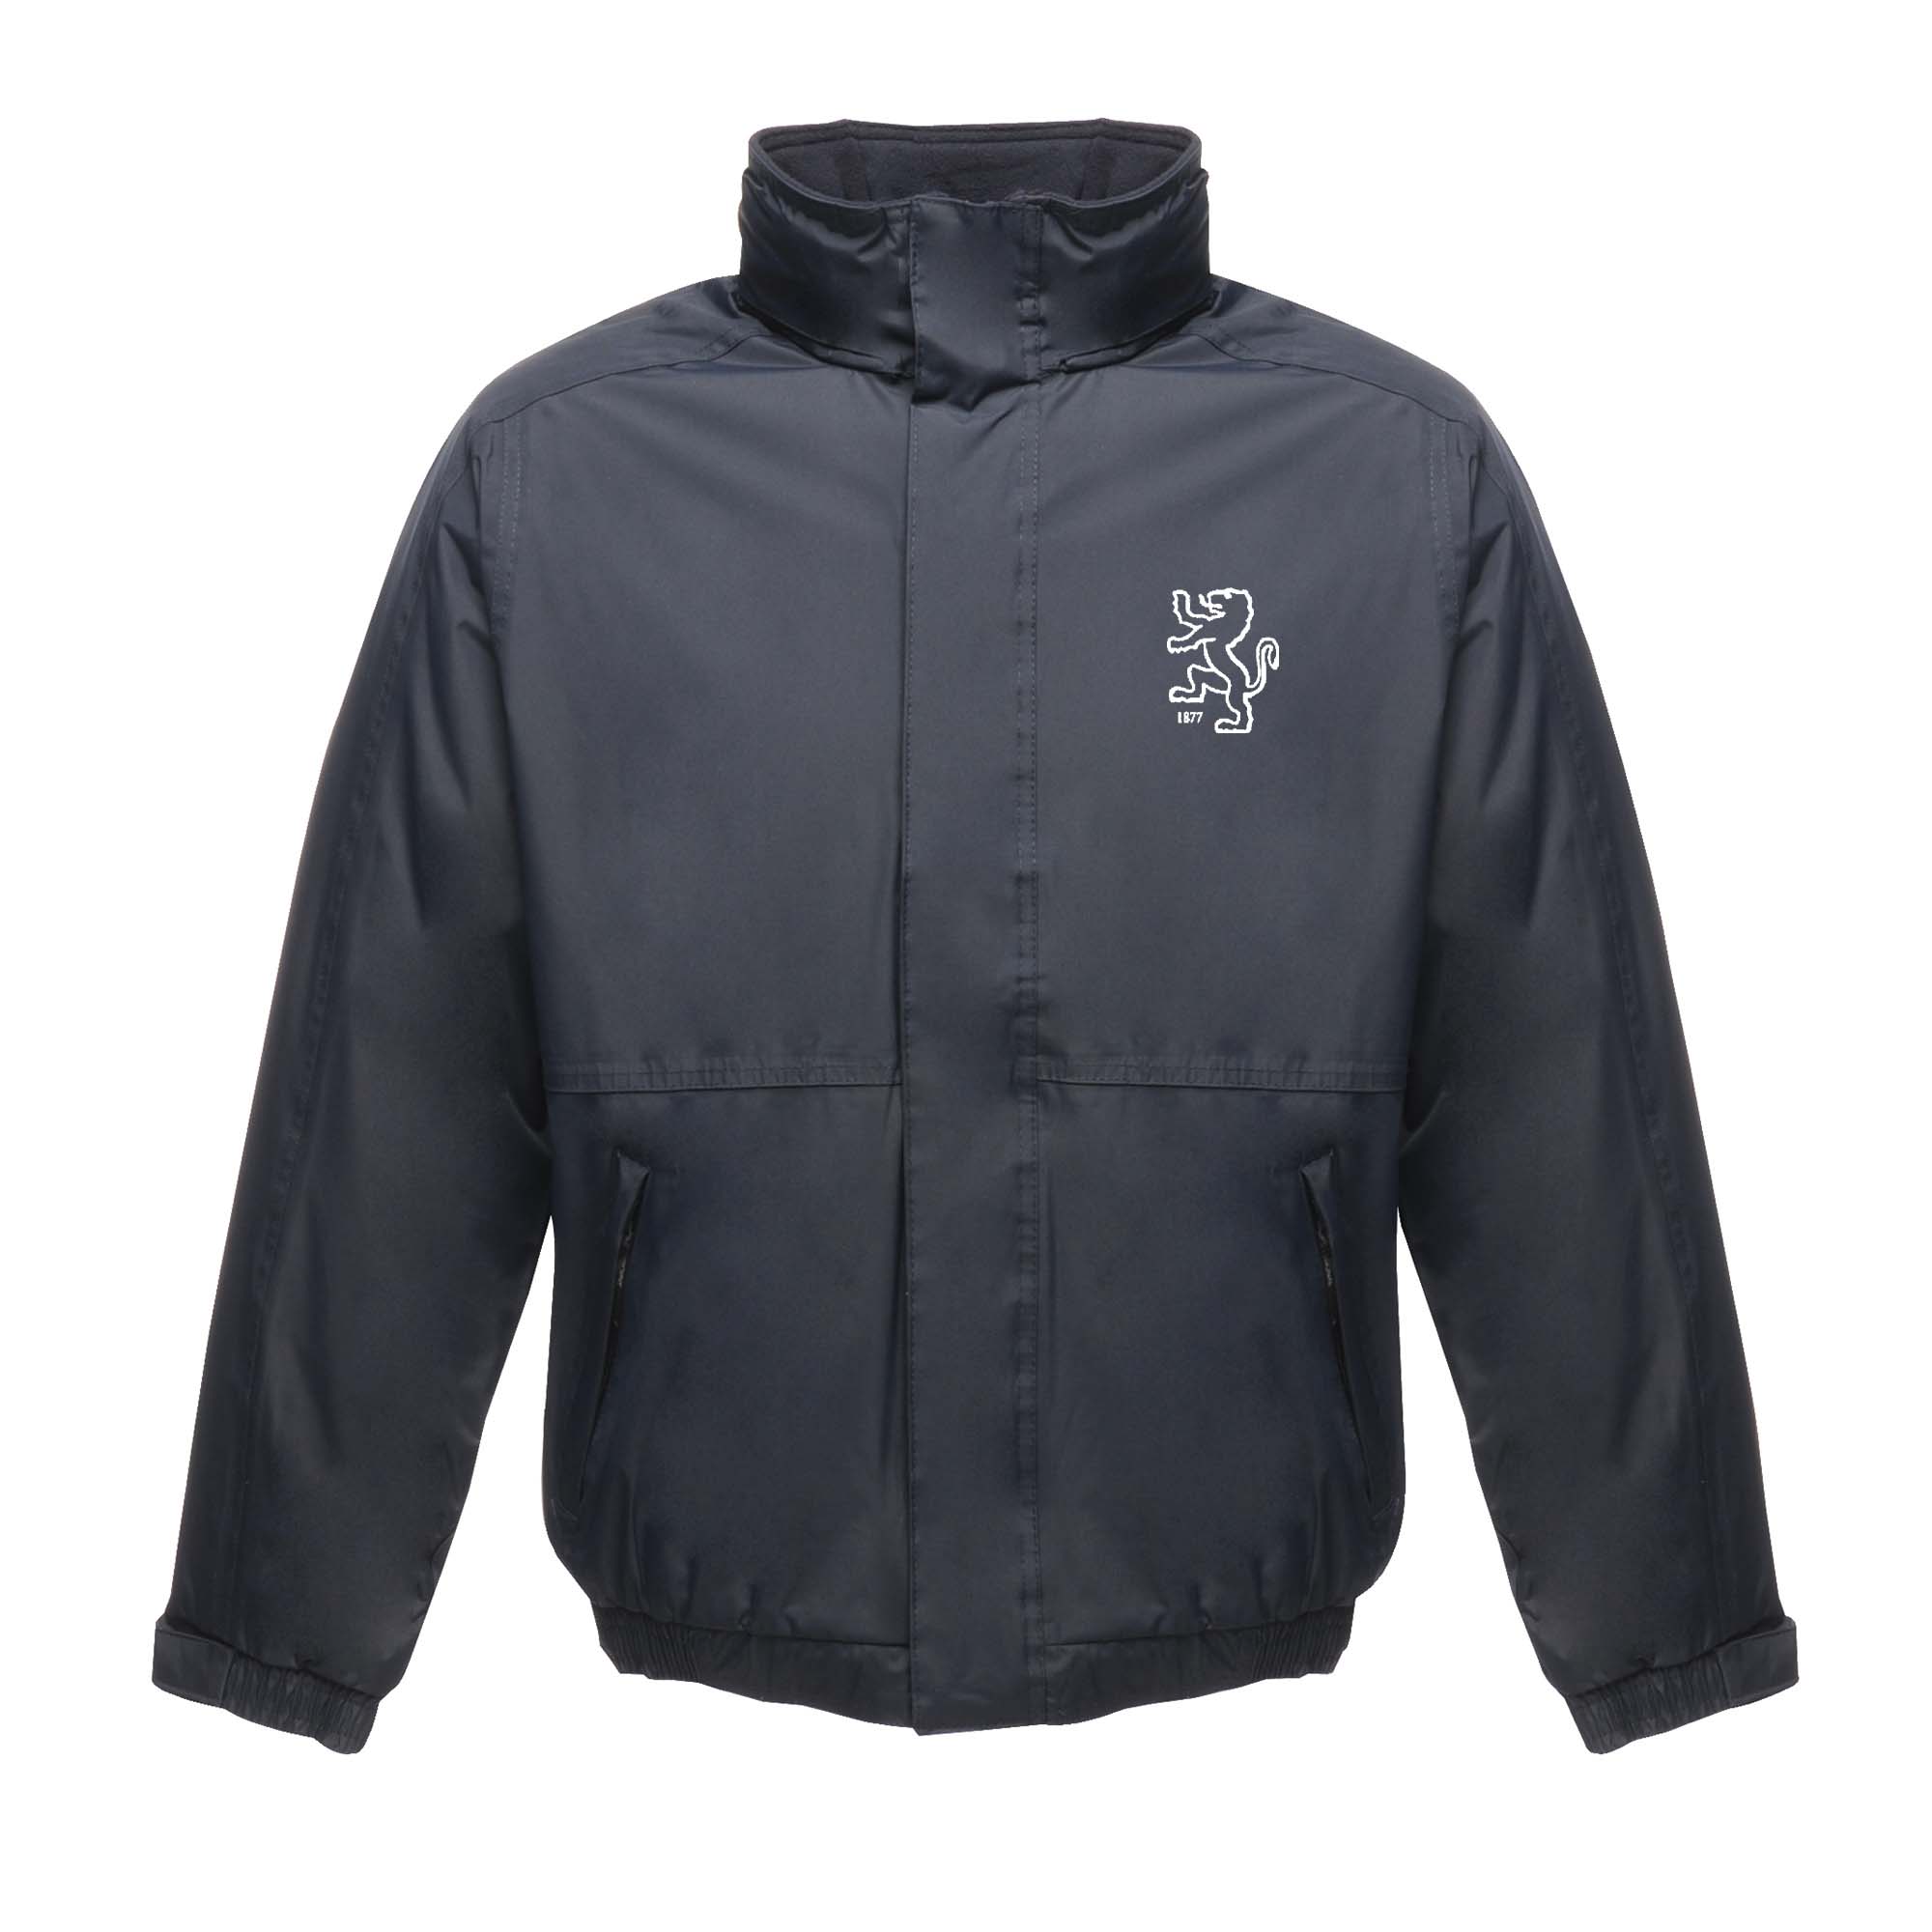 Waterproof Jacket with Fleece Lining